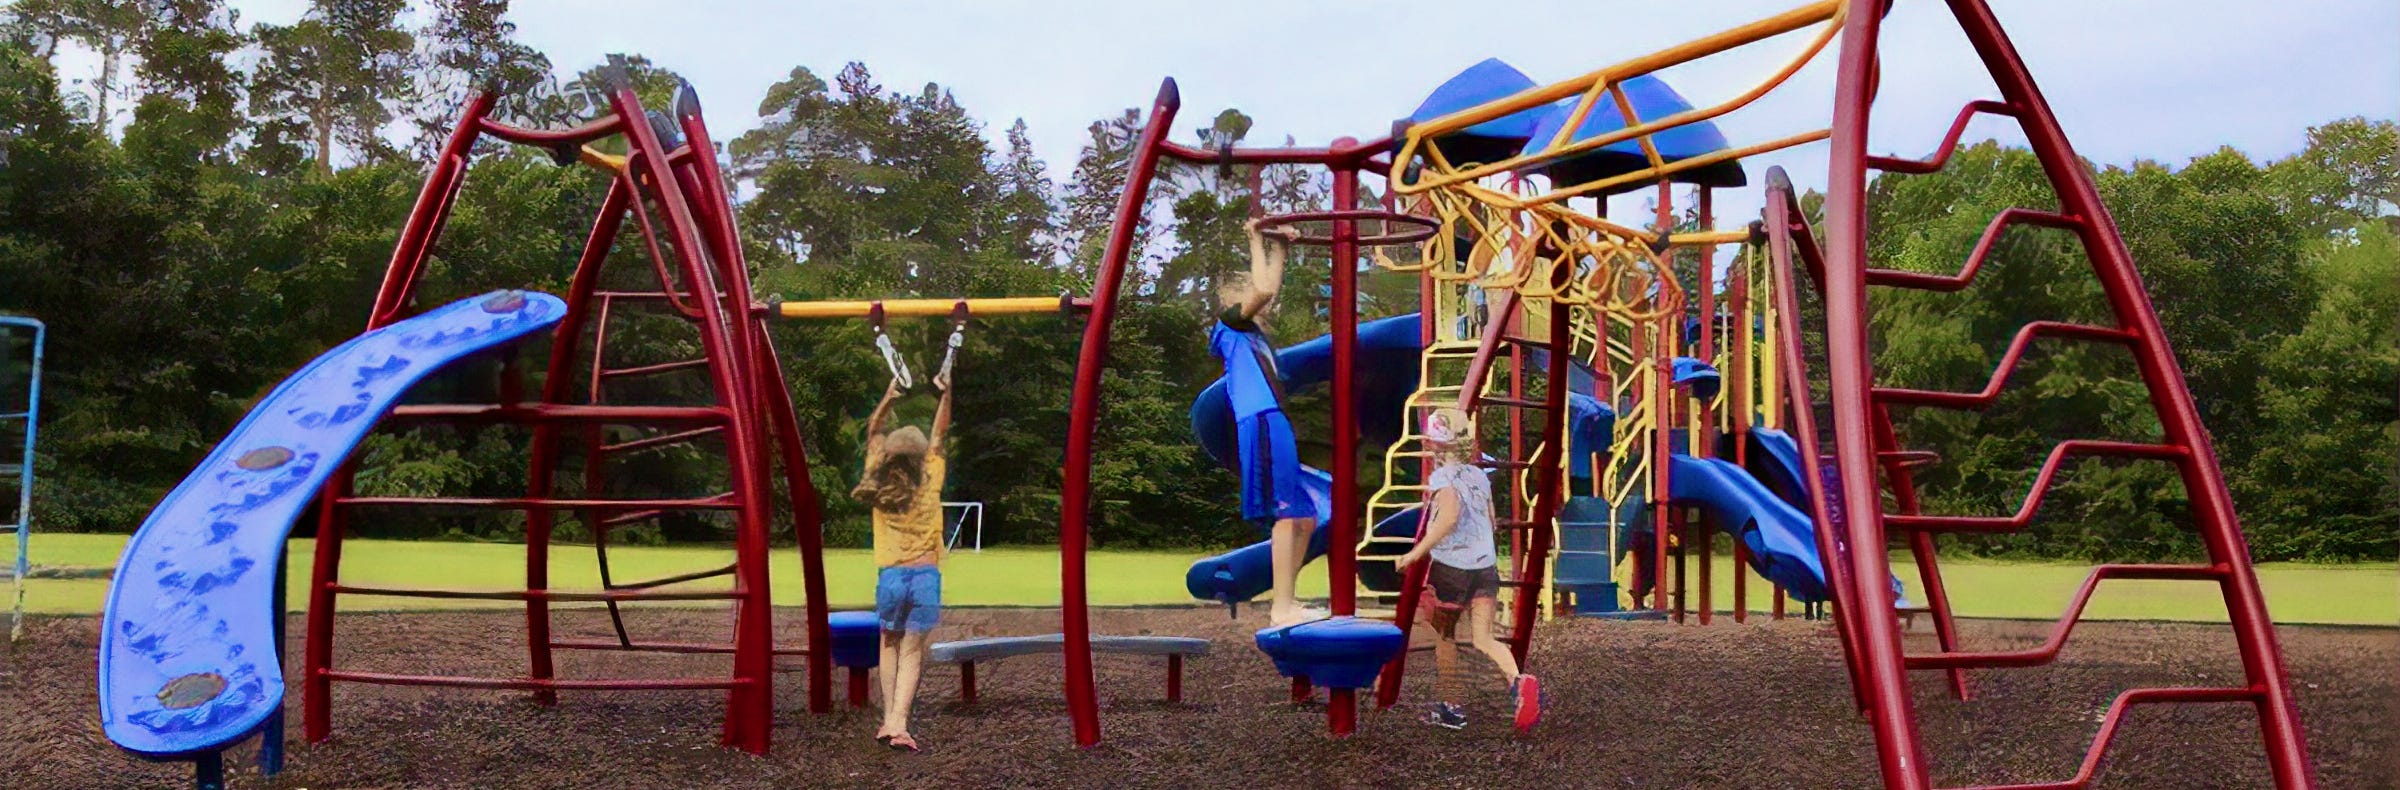 Volunteers Complete New GameTime Playground at Michigan School